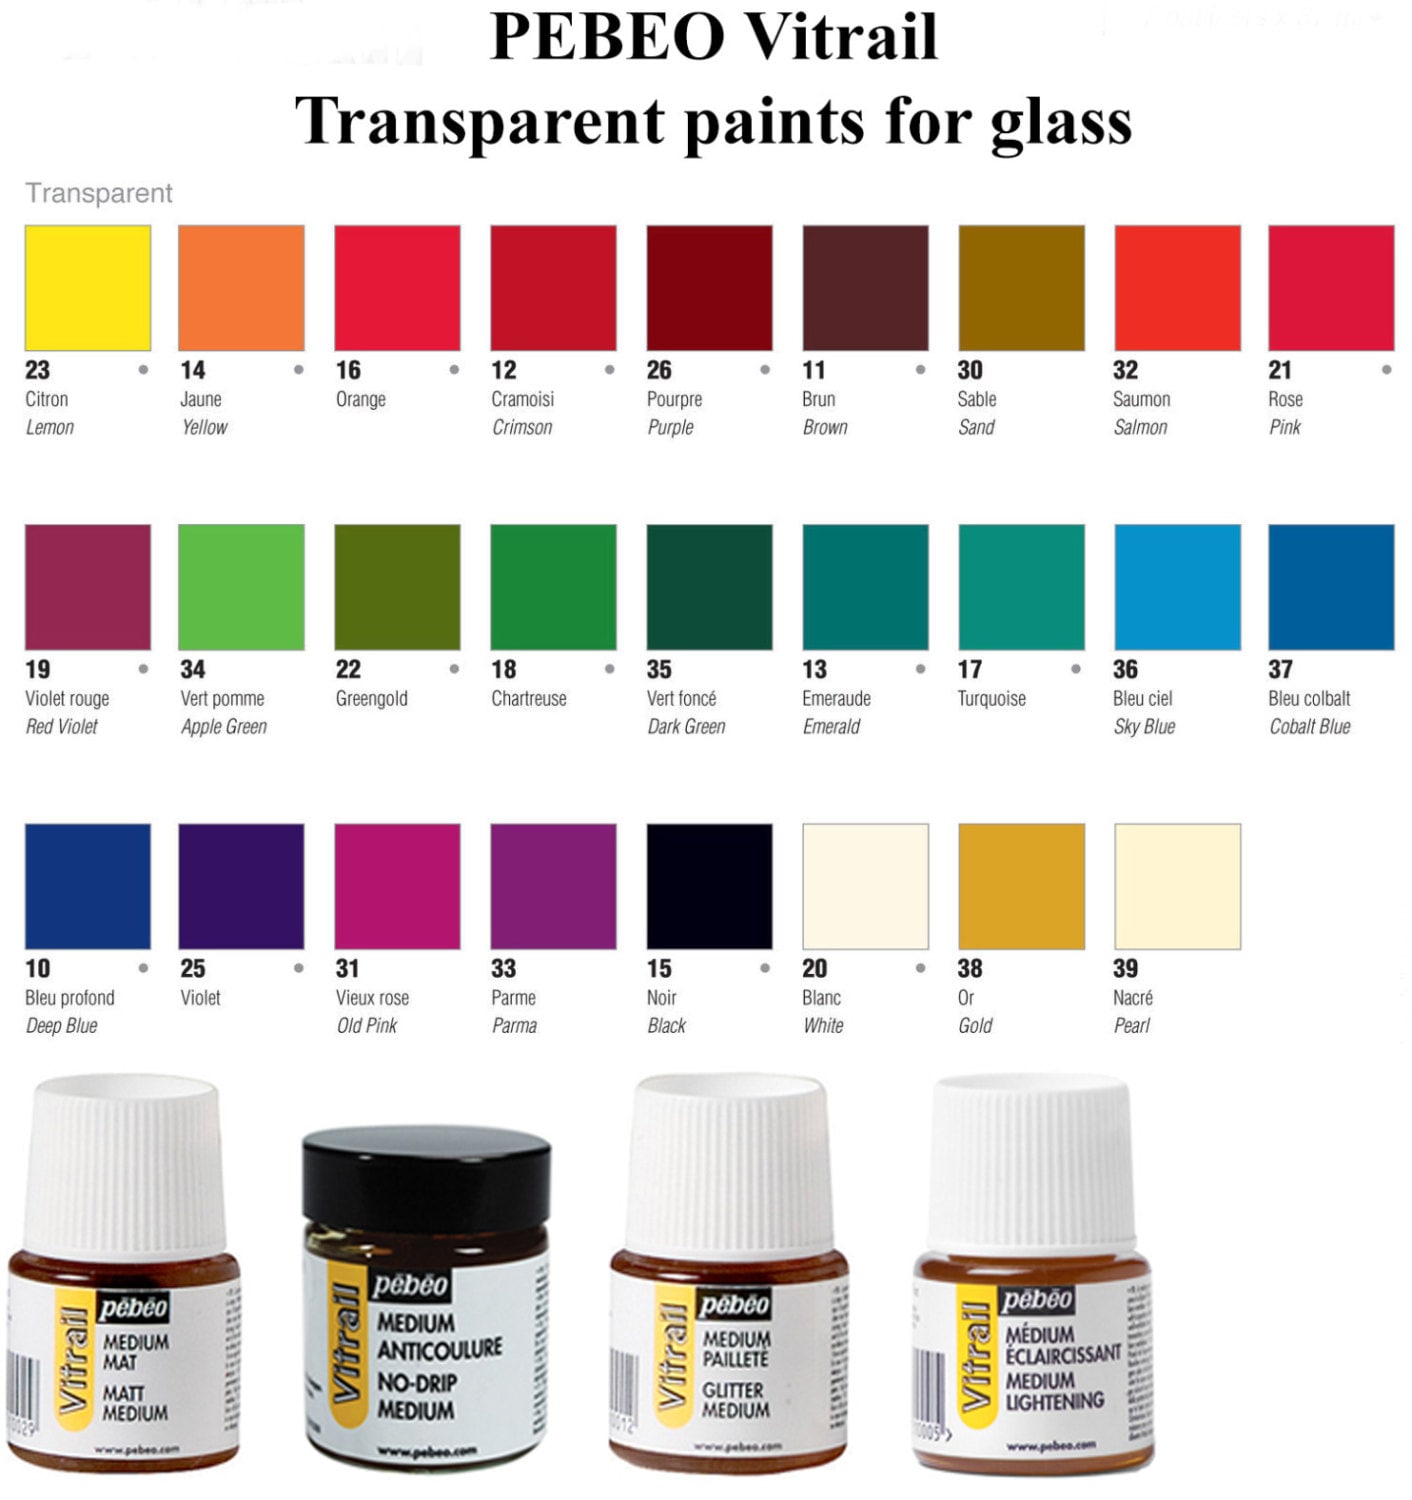 Pebeo Vitrail Glass Paint Instructions